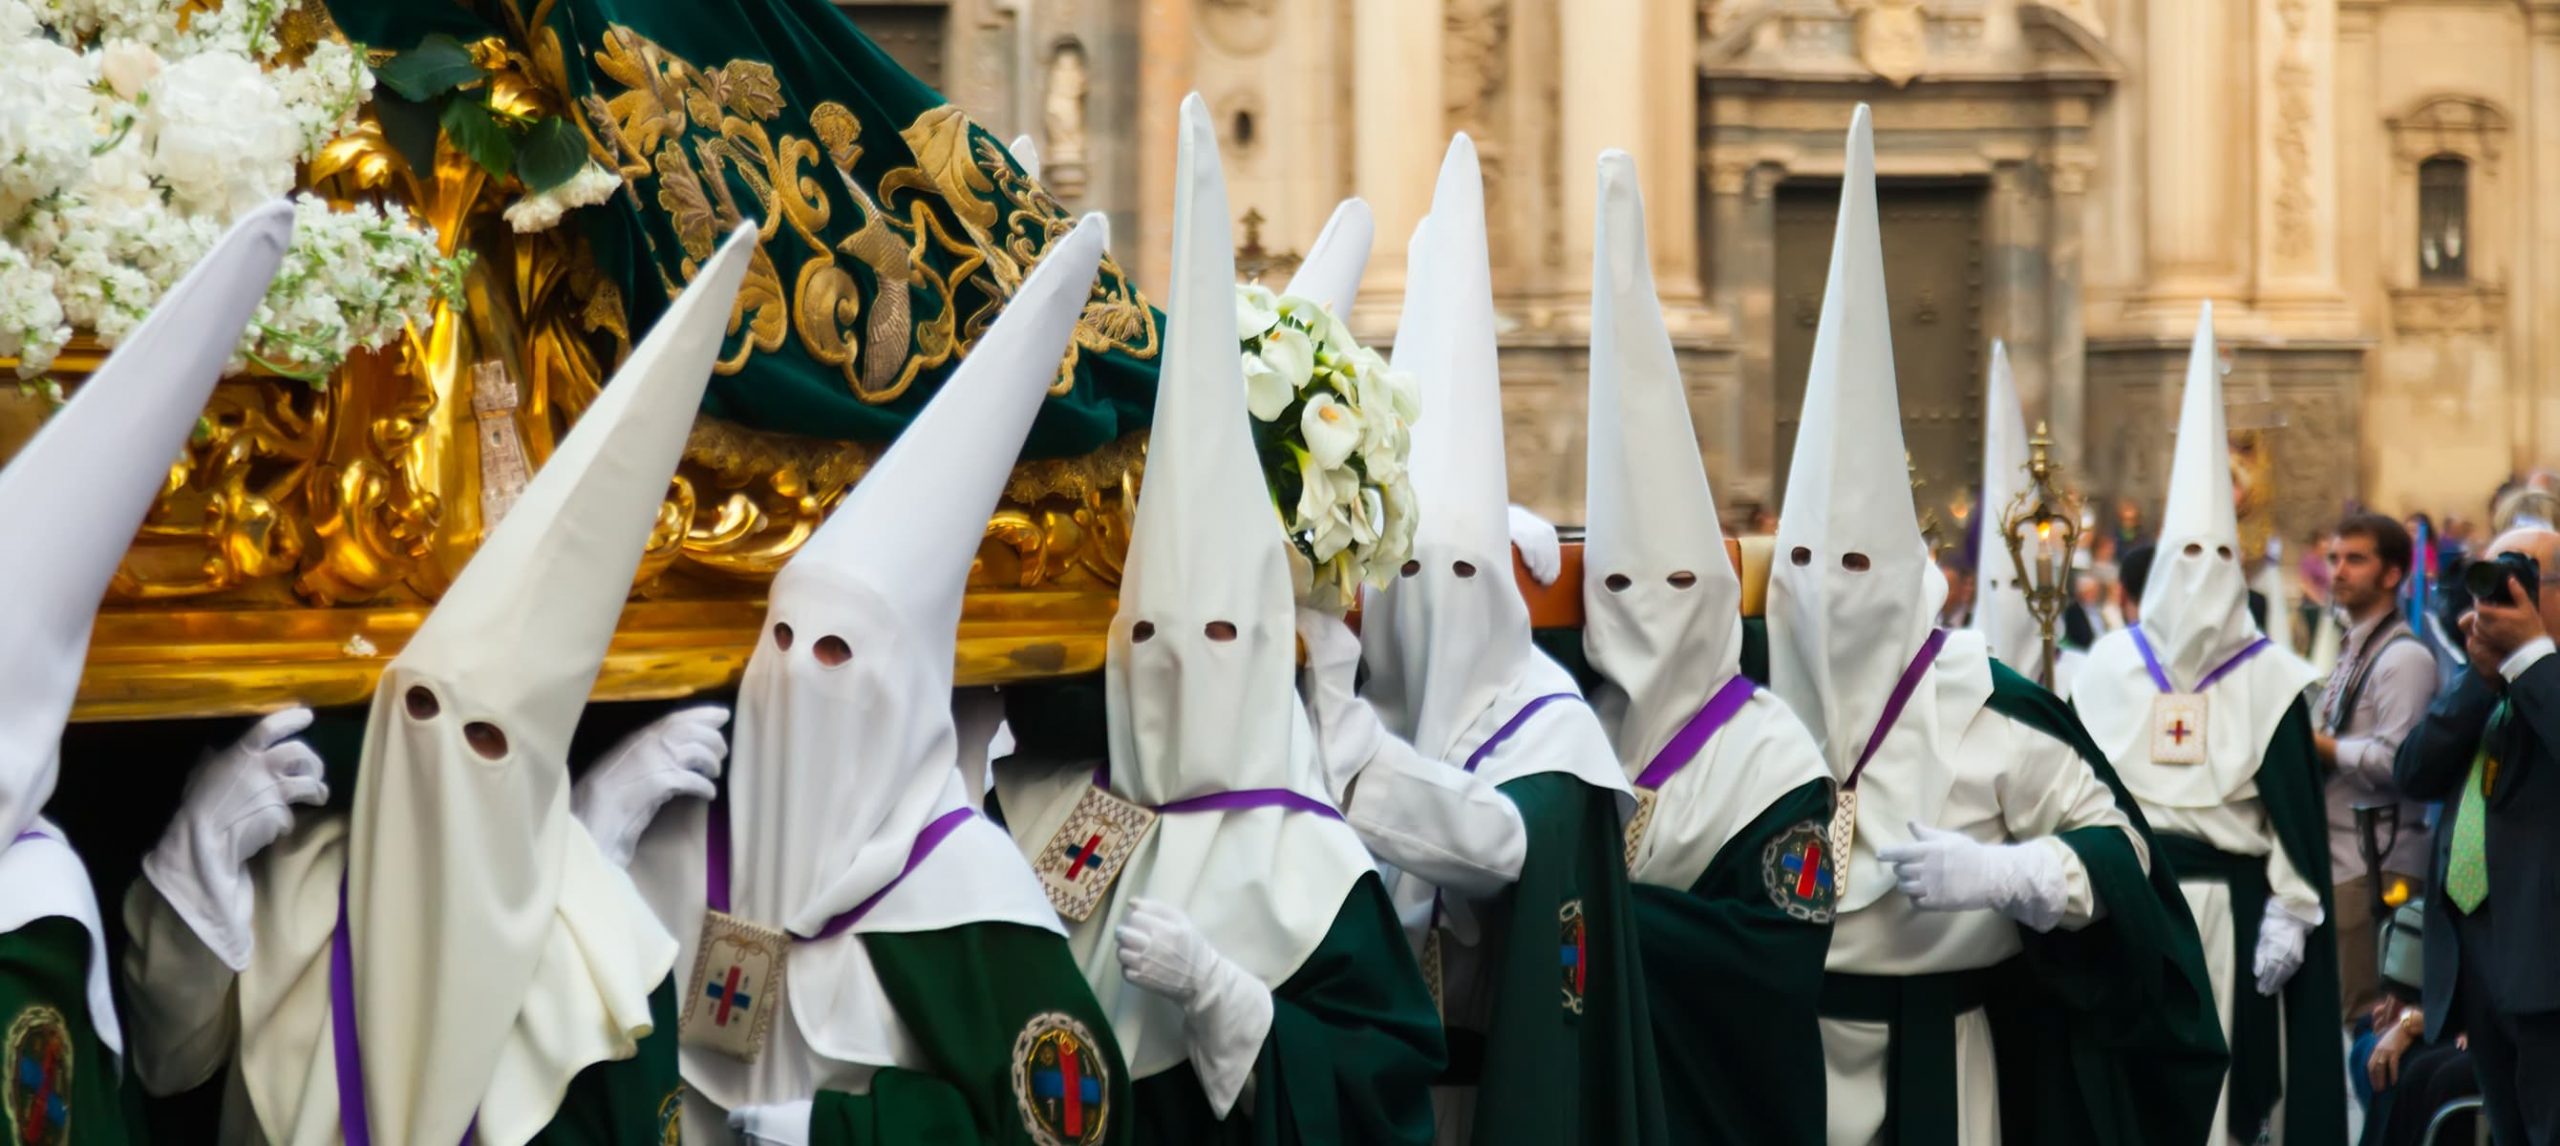 A Complete Guide To The Semana Santa Festival, Spain